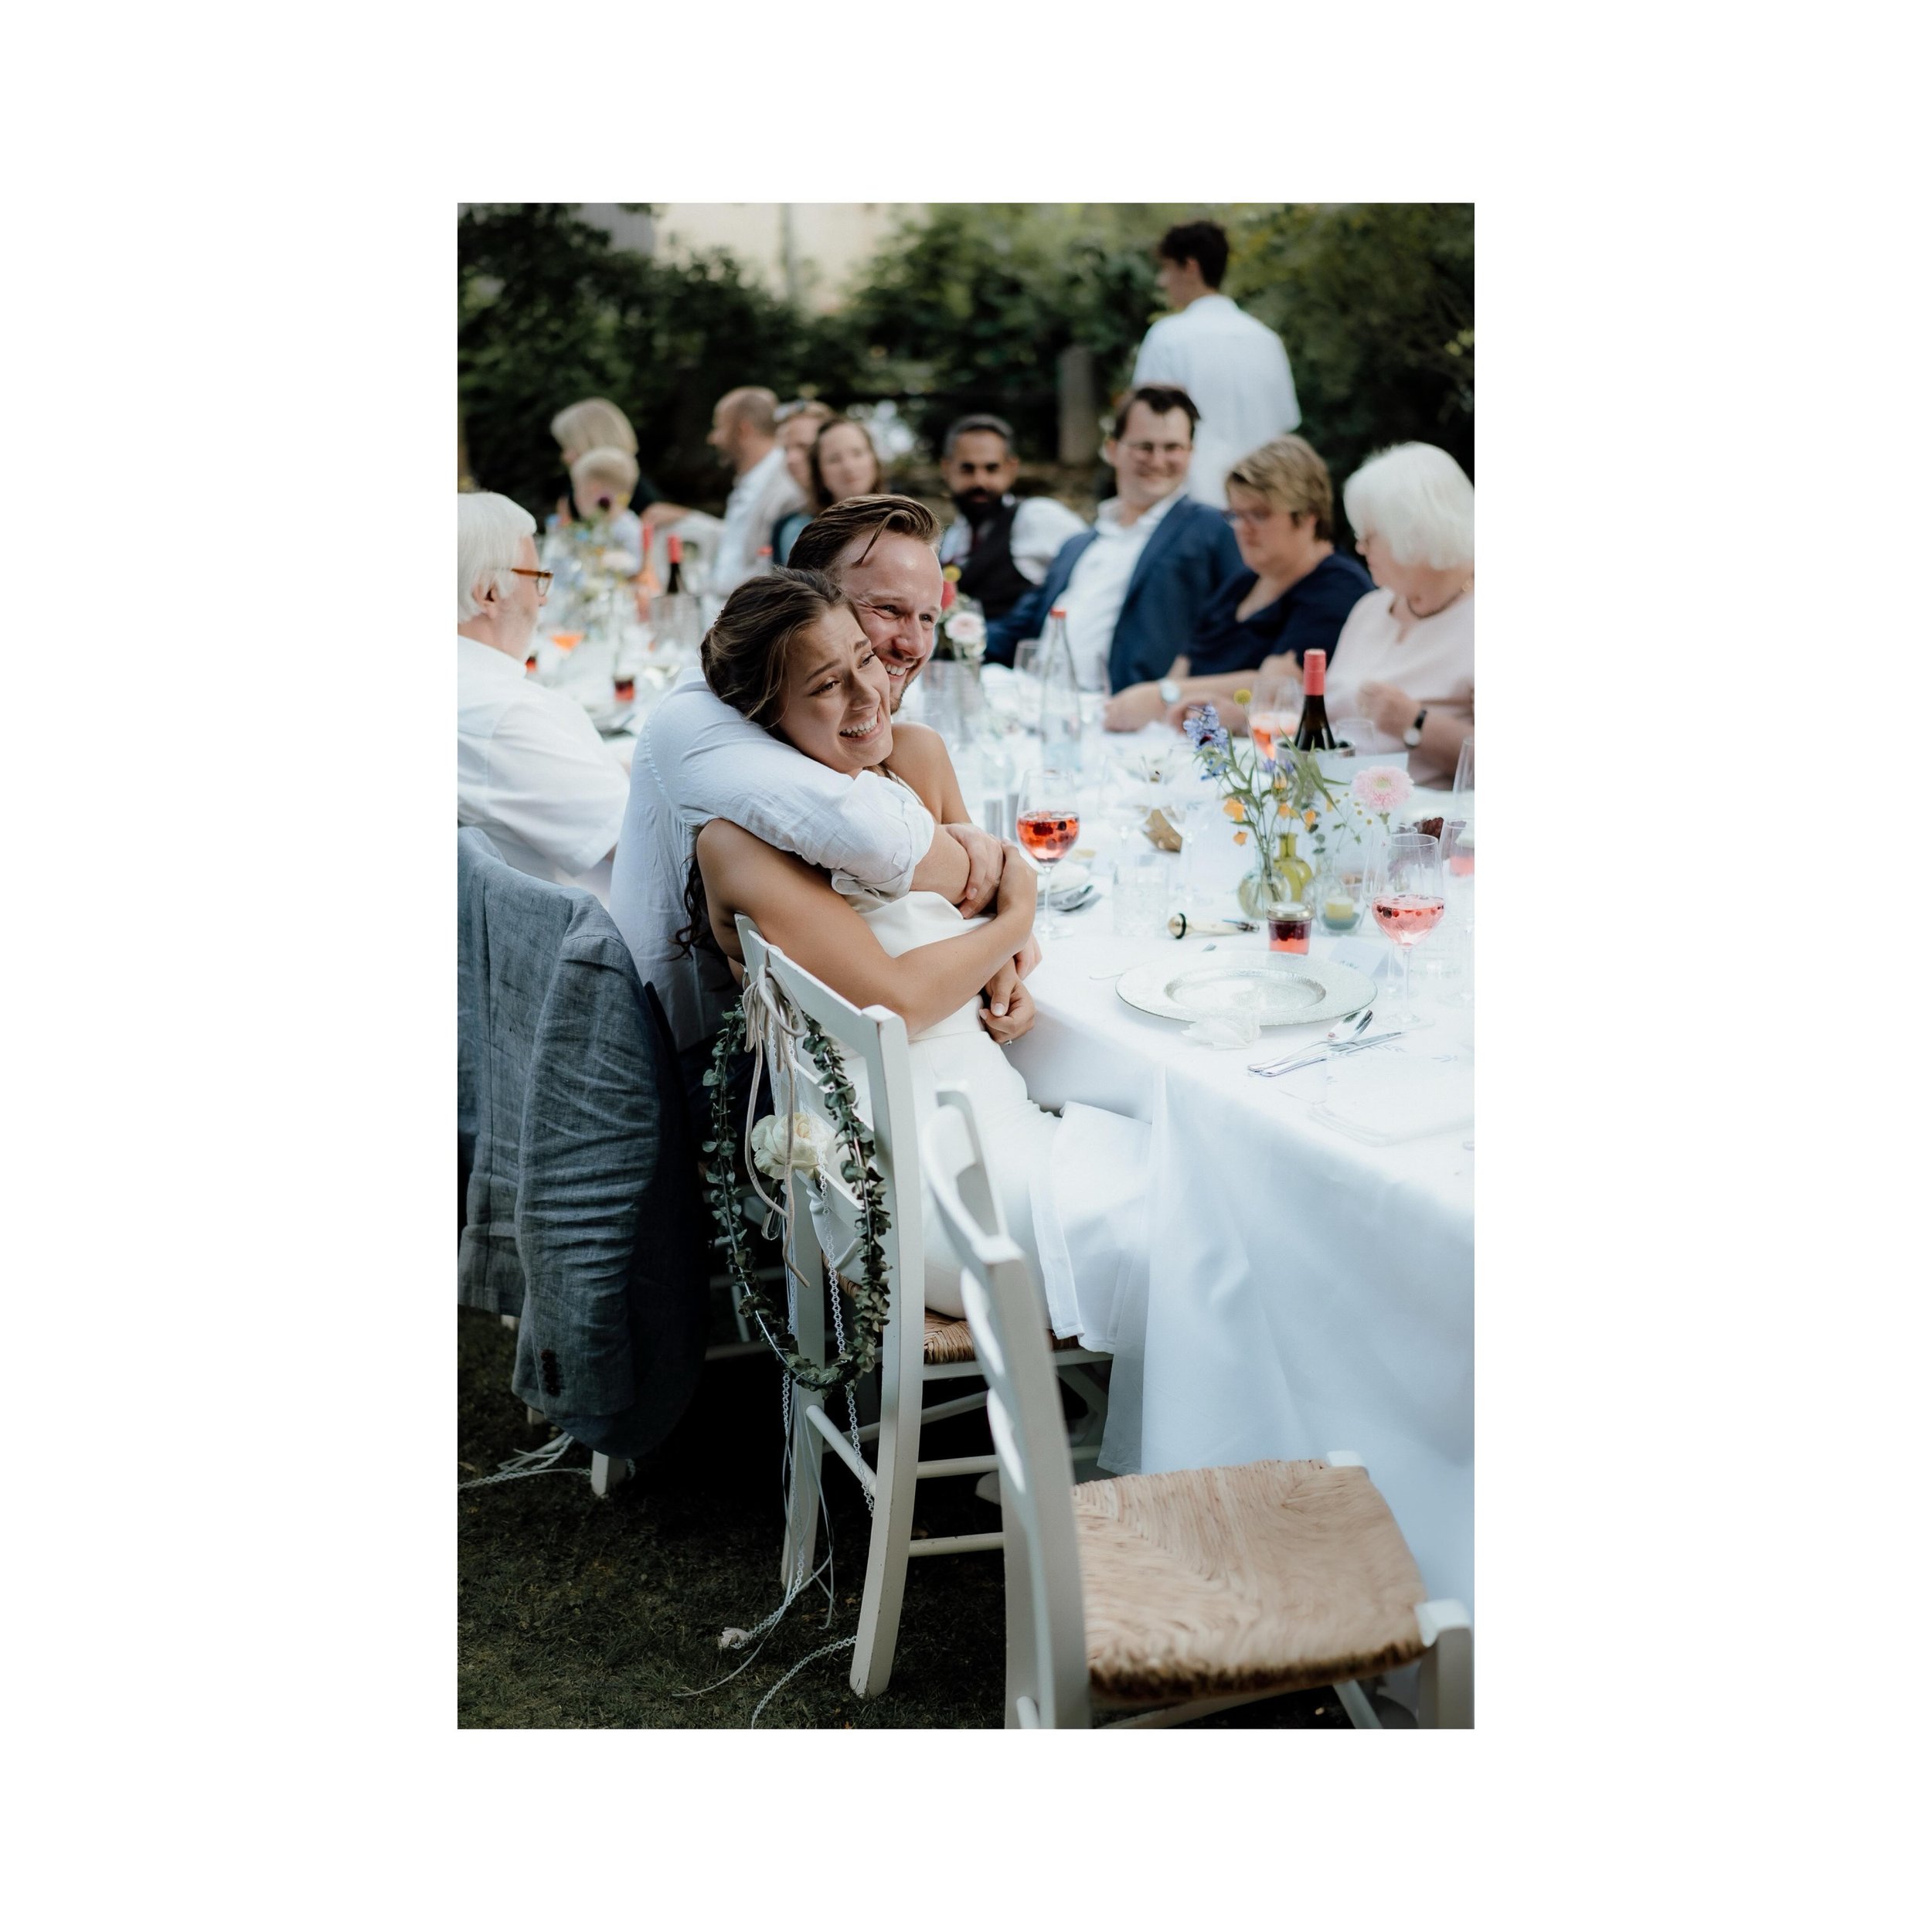 &mdash; Summer Wedding at @boudierkoeller

_____

www.sylvischaffrath.com

&mdash;&mdash;&mdash;

#sylvischaffrath #europeanweddingphotographer #destinationweddingphotographer #italyweddingphotographer #tuscanyweddingphotographer #franceweddingphotog